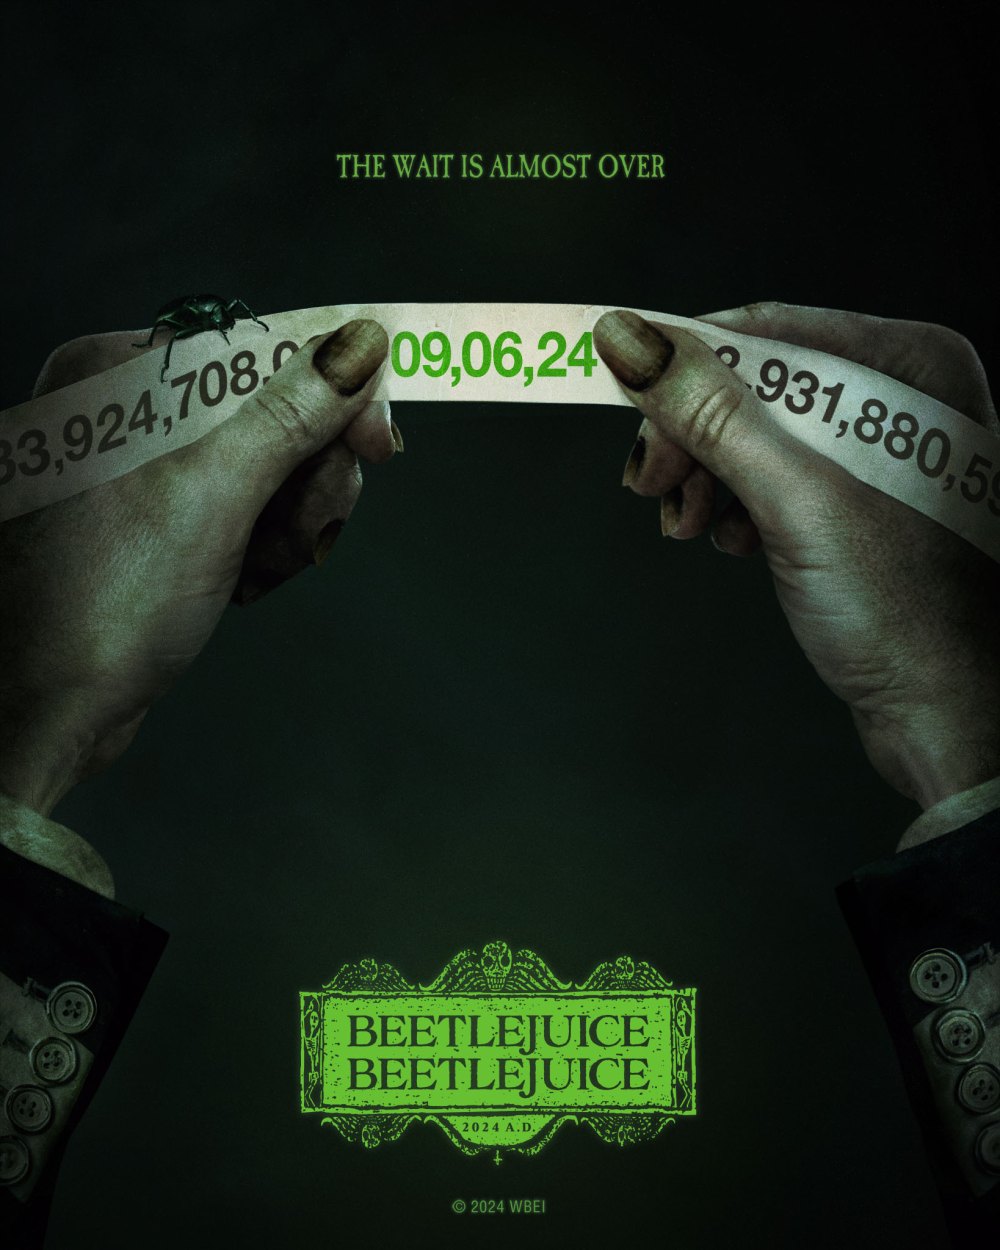 New Beetlejuice 2 Poster Reveals Film Official Titlehttps://twitter.com/wbpictures/status/1753101347925504256?ref_src=twsrc%5Egoogle%7Ctwcamp%5Eserp%7Ctwgr%5Etweet